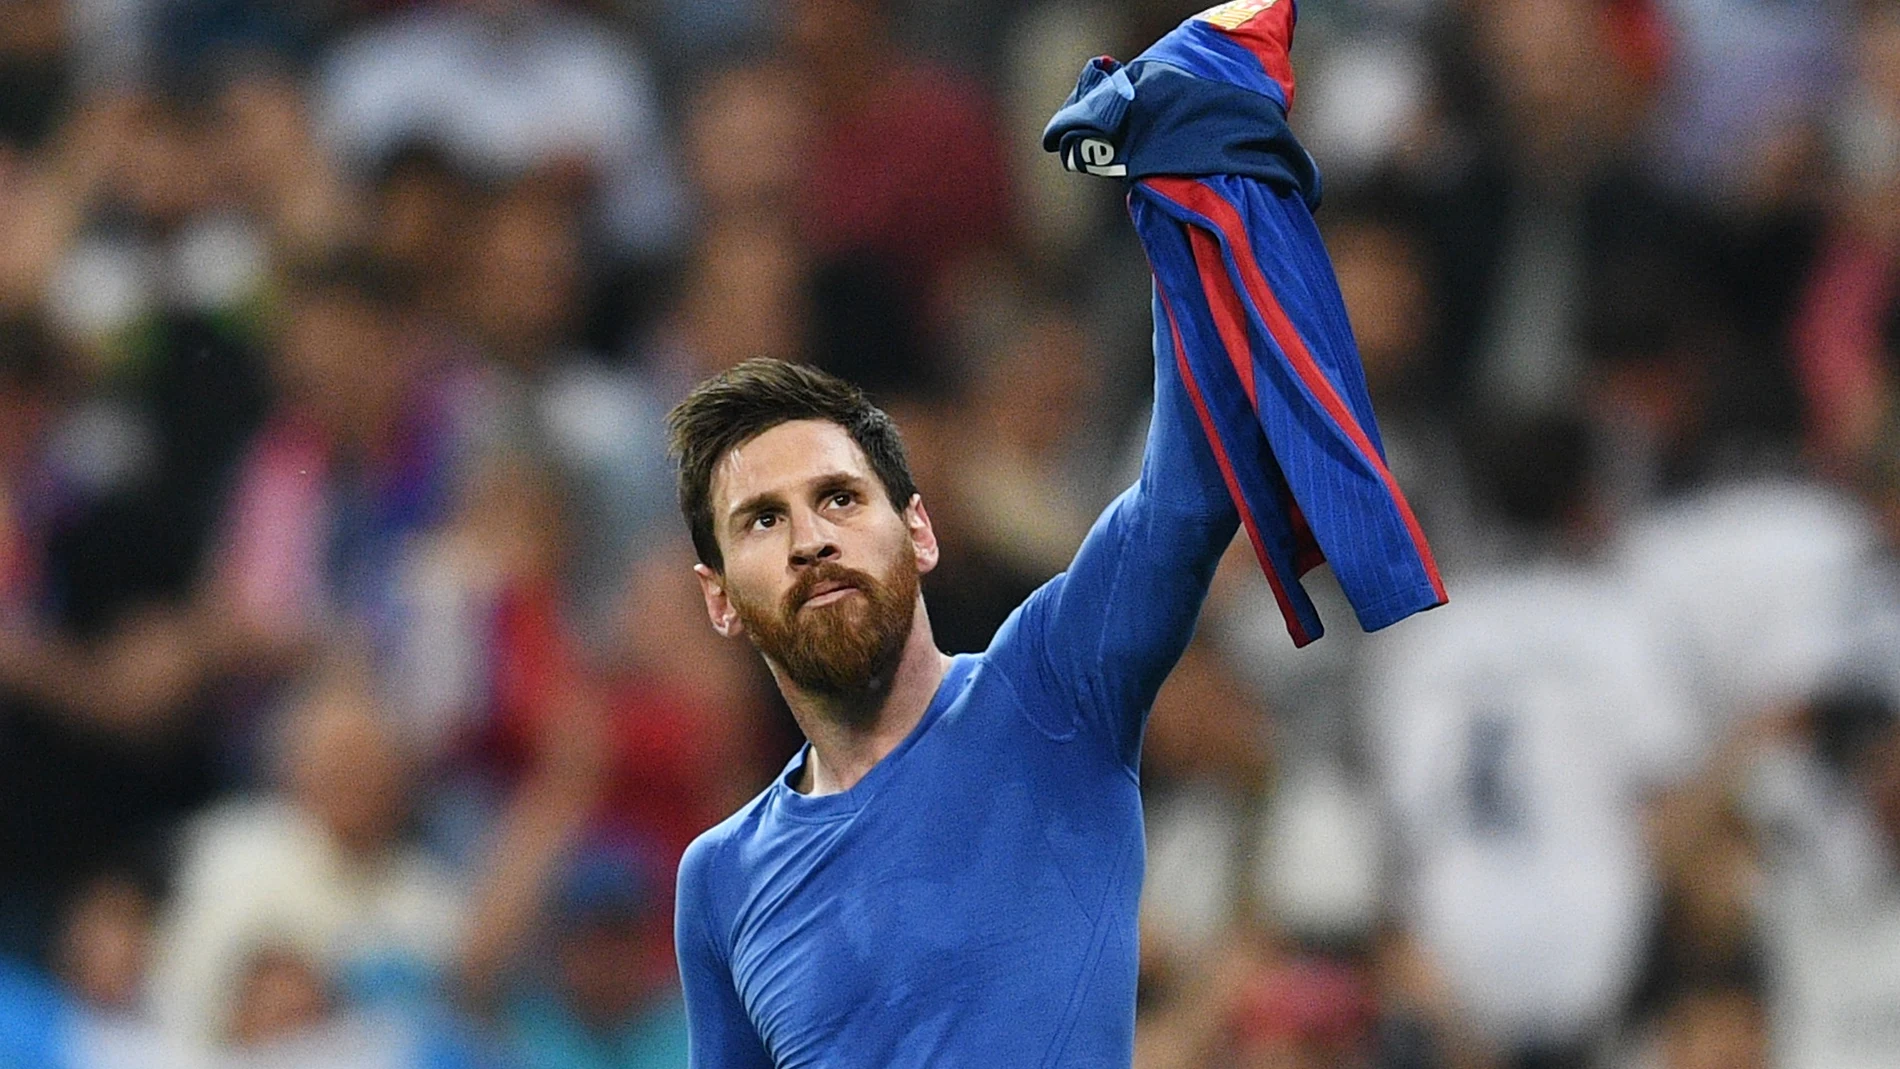 Cristiano Ronaldo muestra la camiseta al Camp Nou a lo Messi